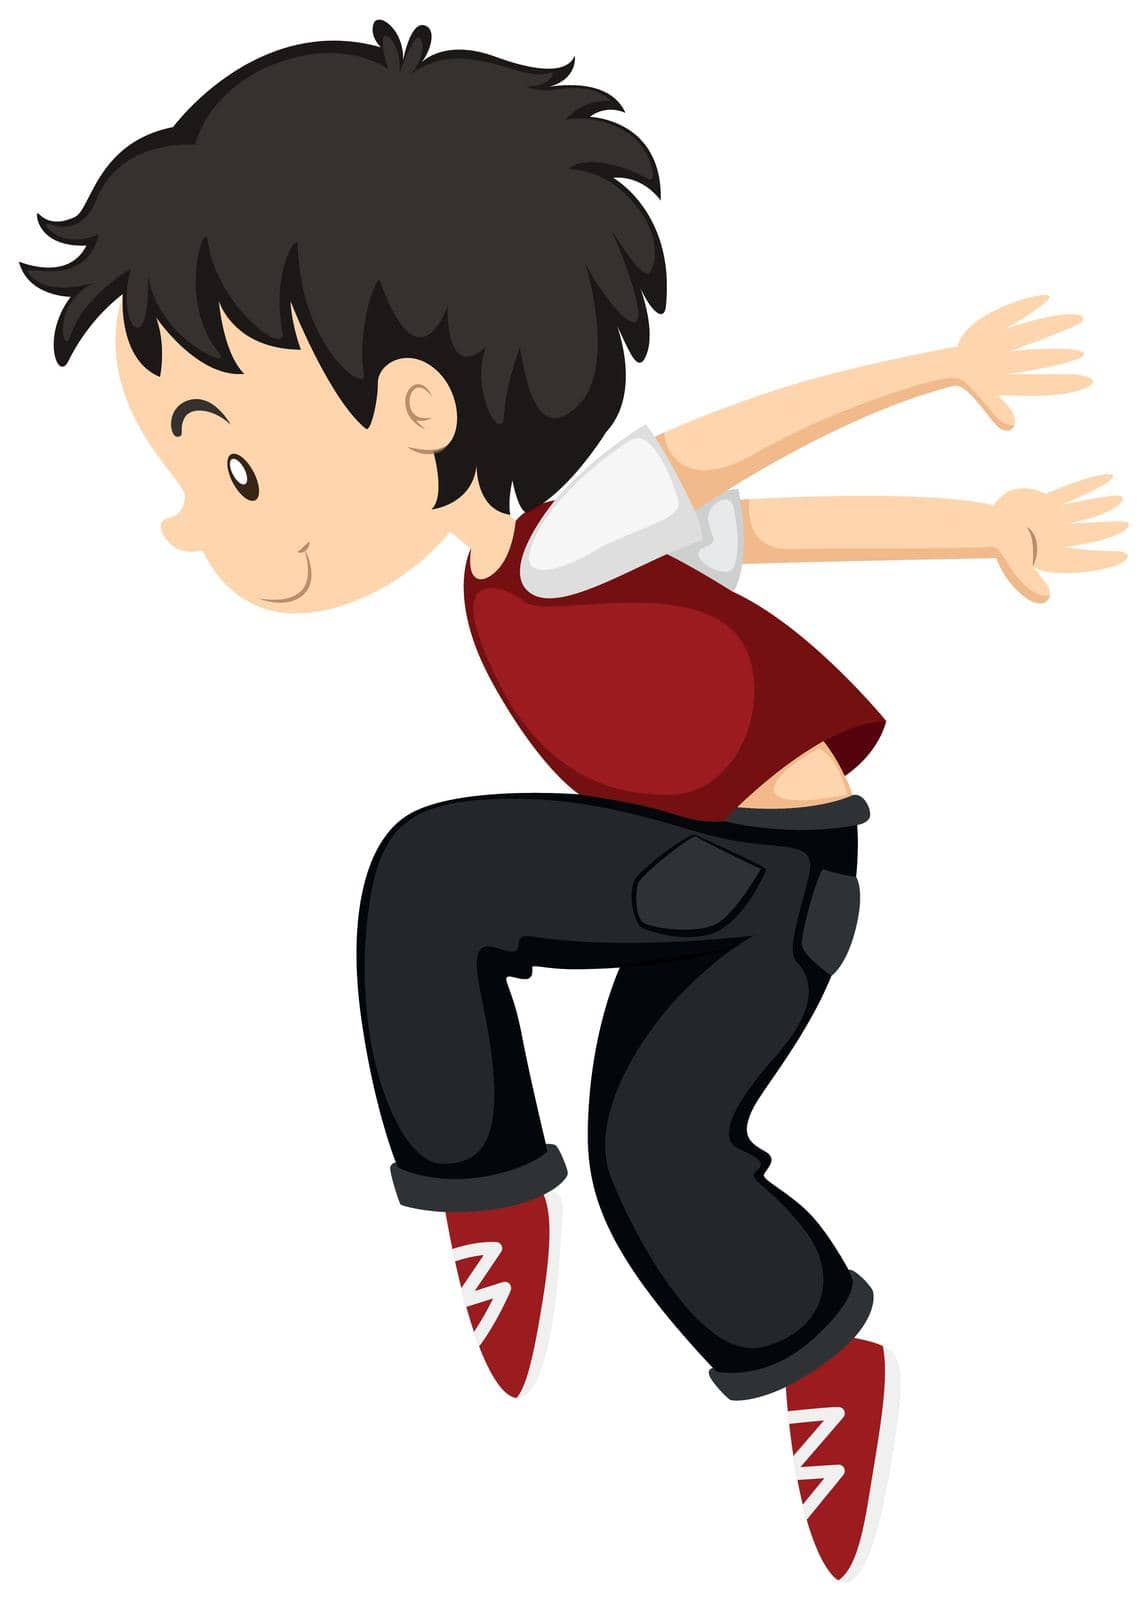 Boy doing breakdance alone illustration